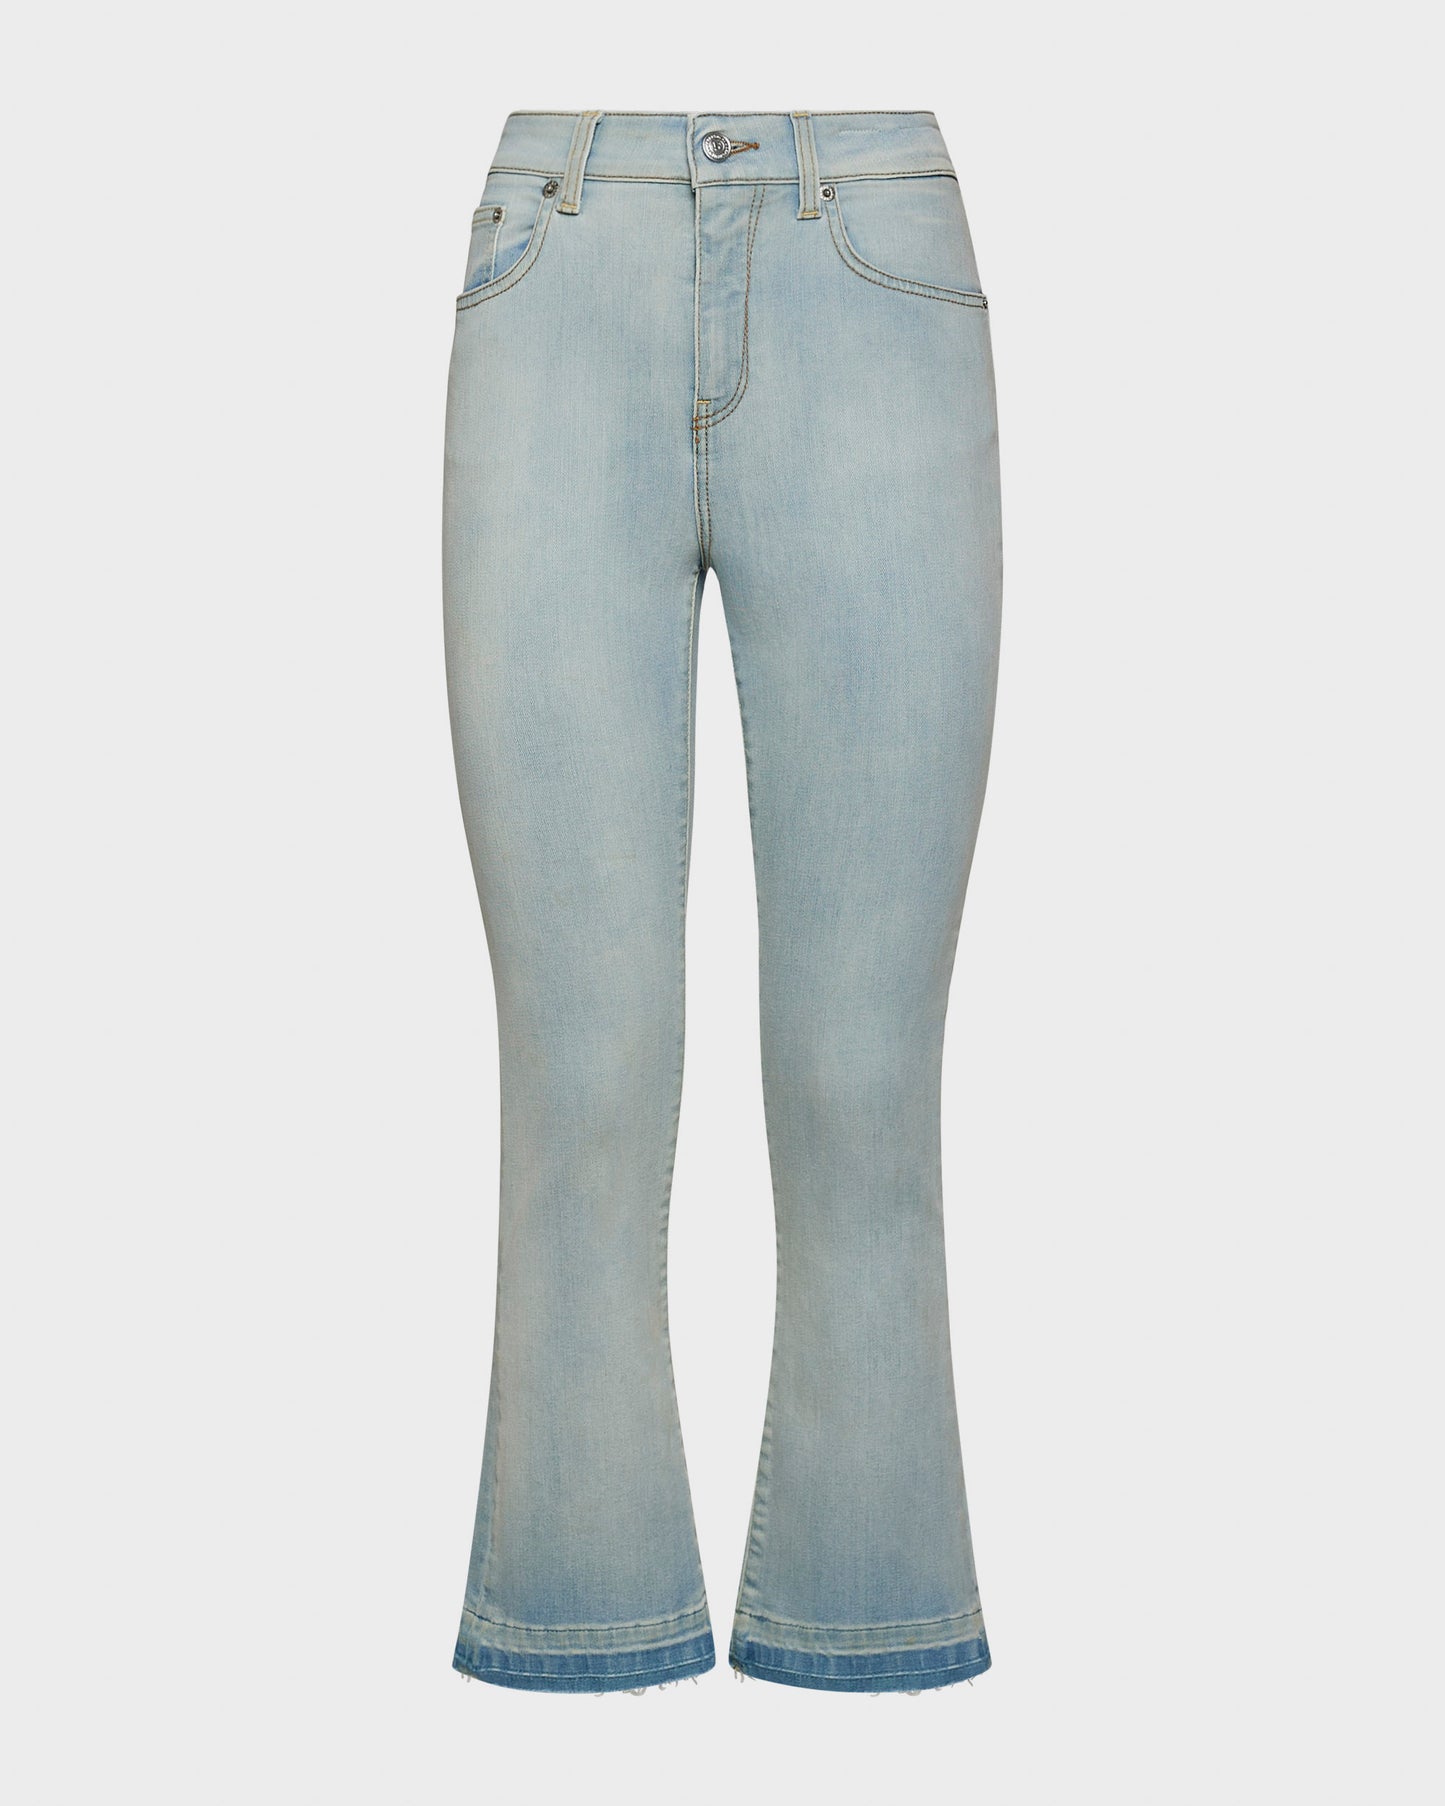 Clar jeans bootcut crop